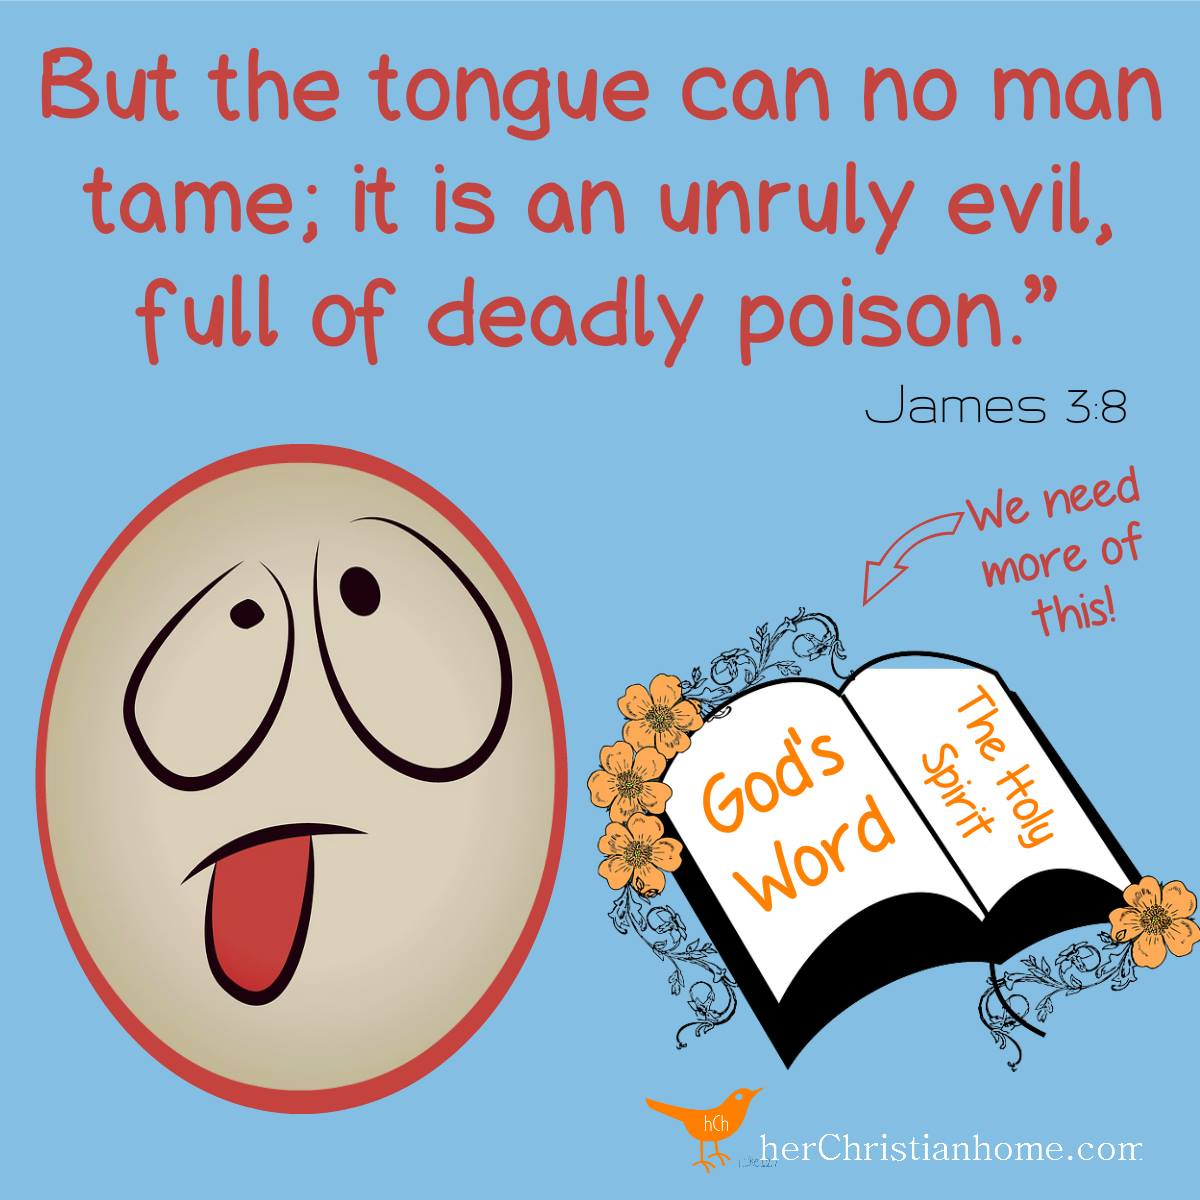 But the tongue can no man tame - James 3:8 kjv #devotional #womensdevotional